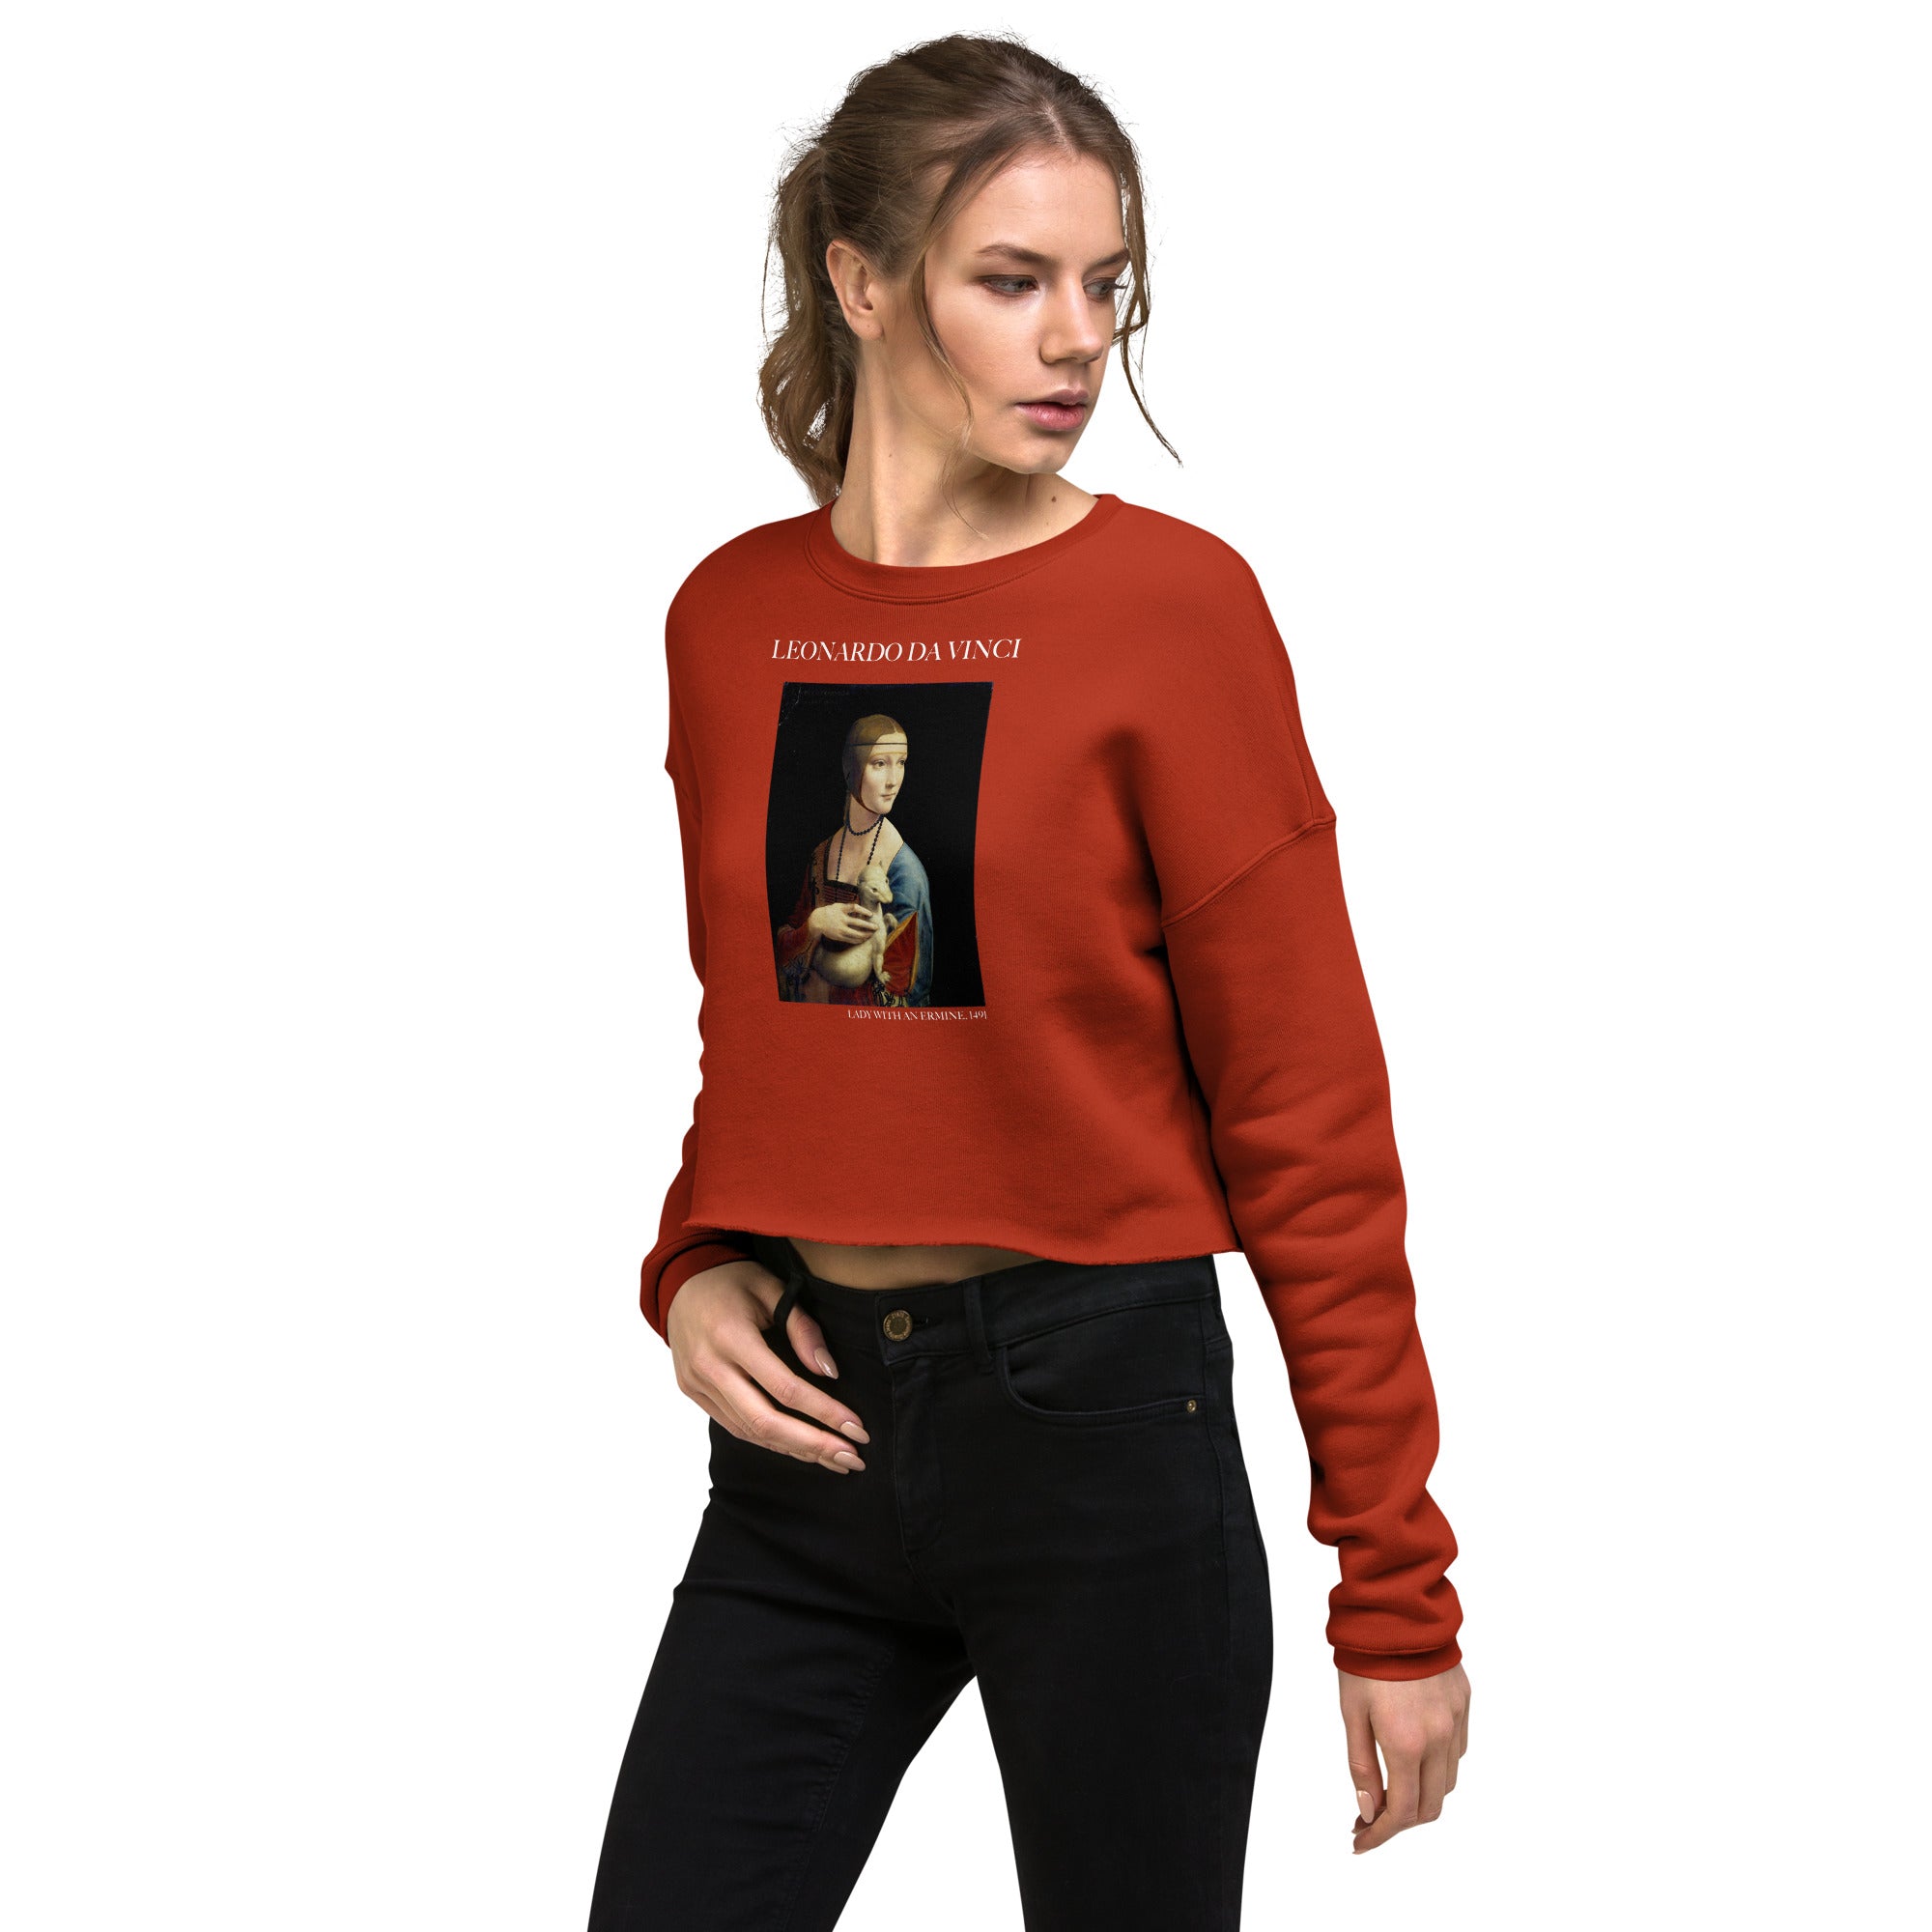 Leonardo da Vinci 'Lady with an Ermine' Famous Painting Cropped Sweatshirt | Premium Art Cropped Sweatshirt